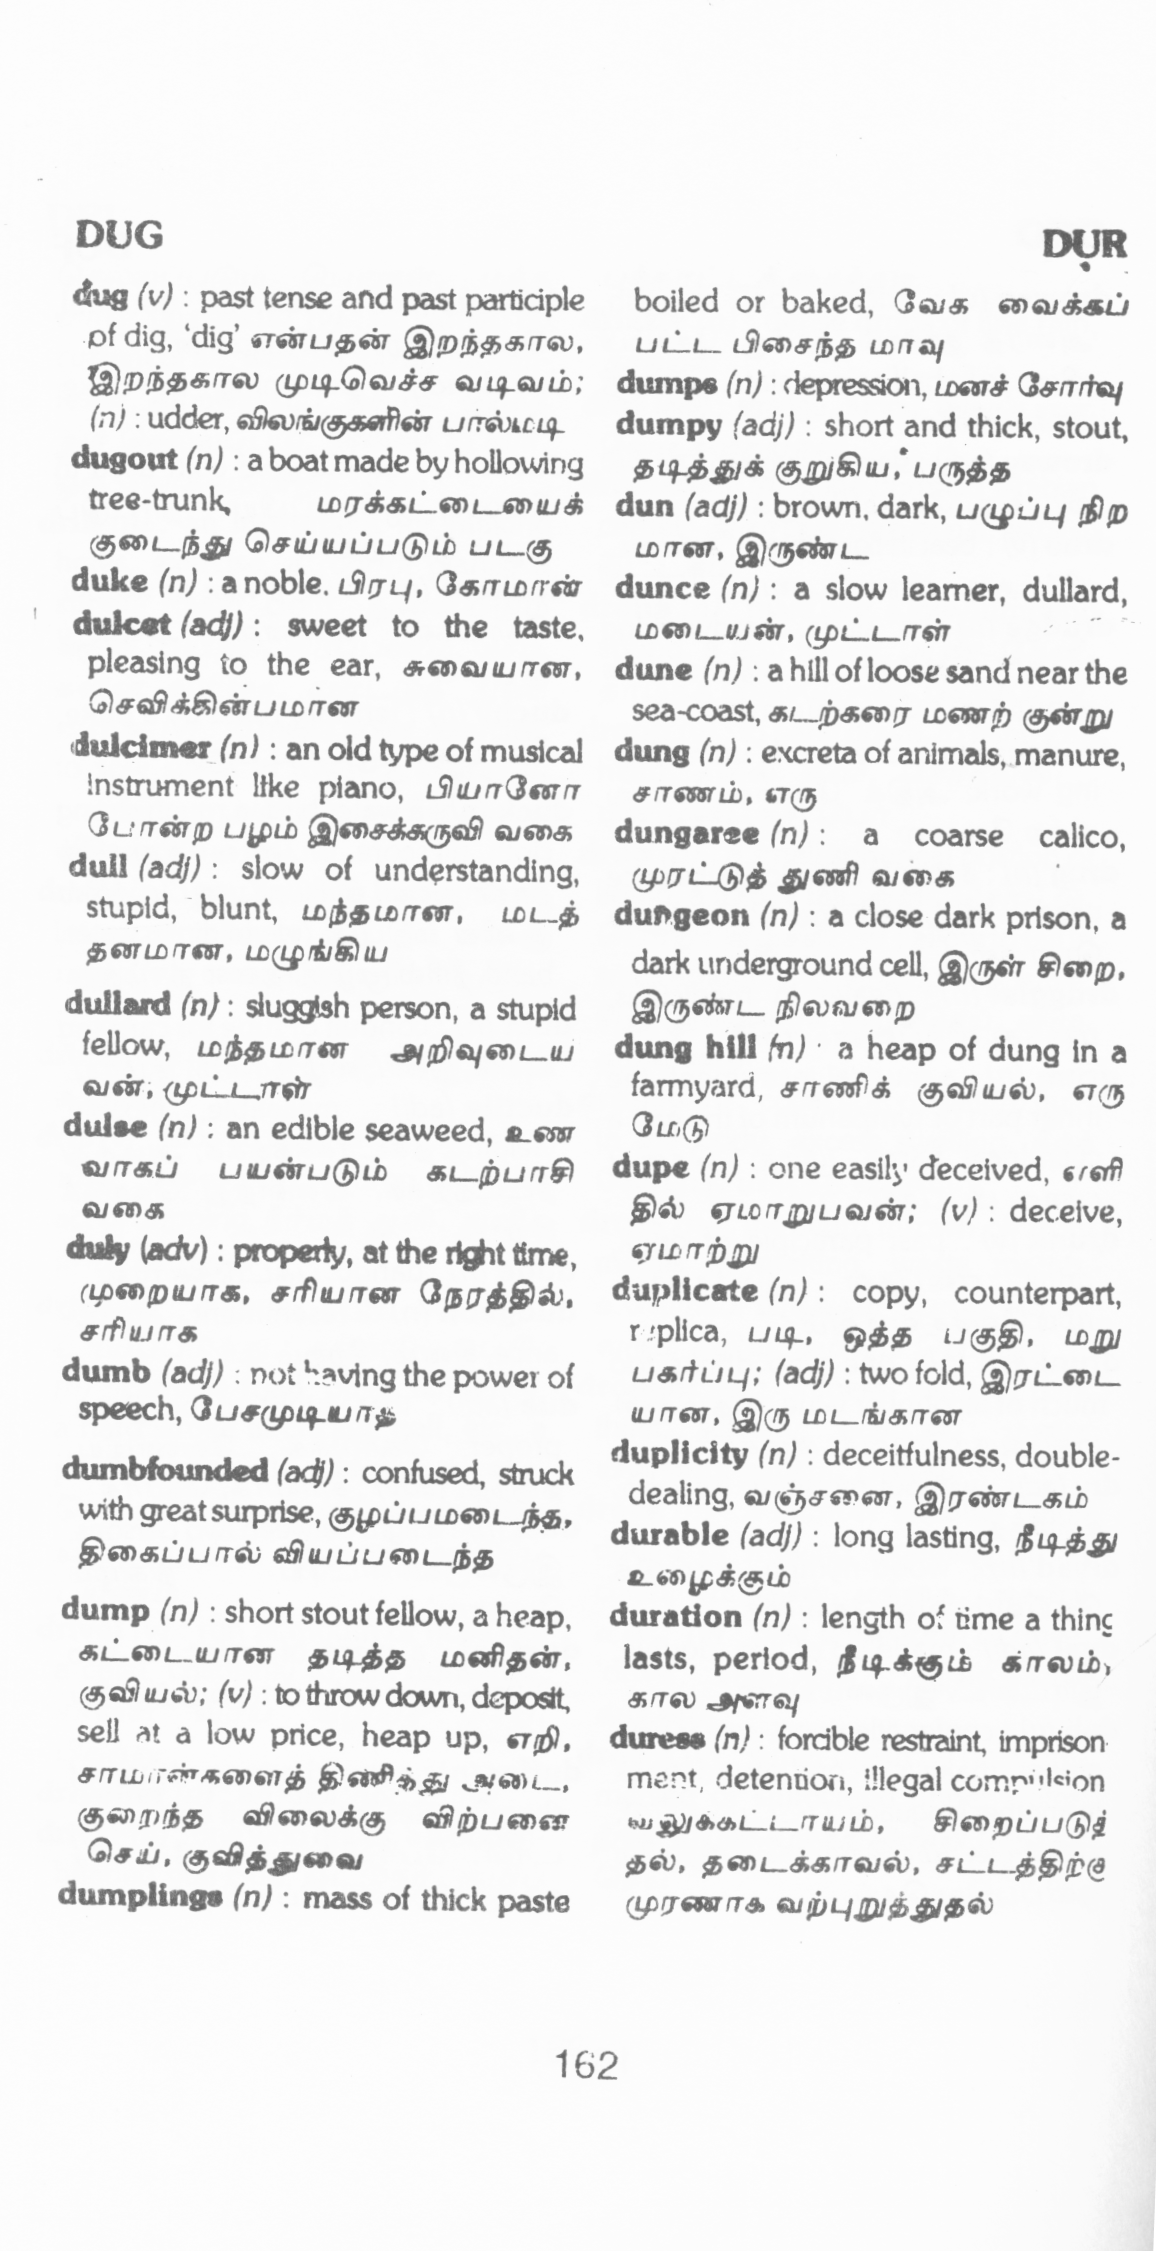 Tamil-English / English-Tamil Dictionary